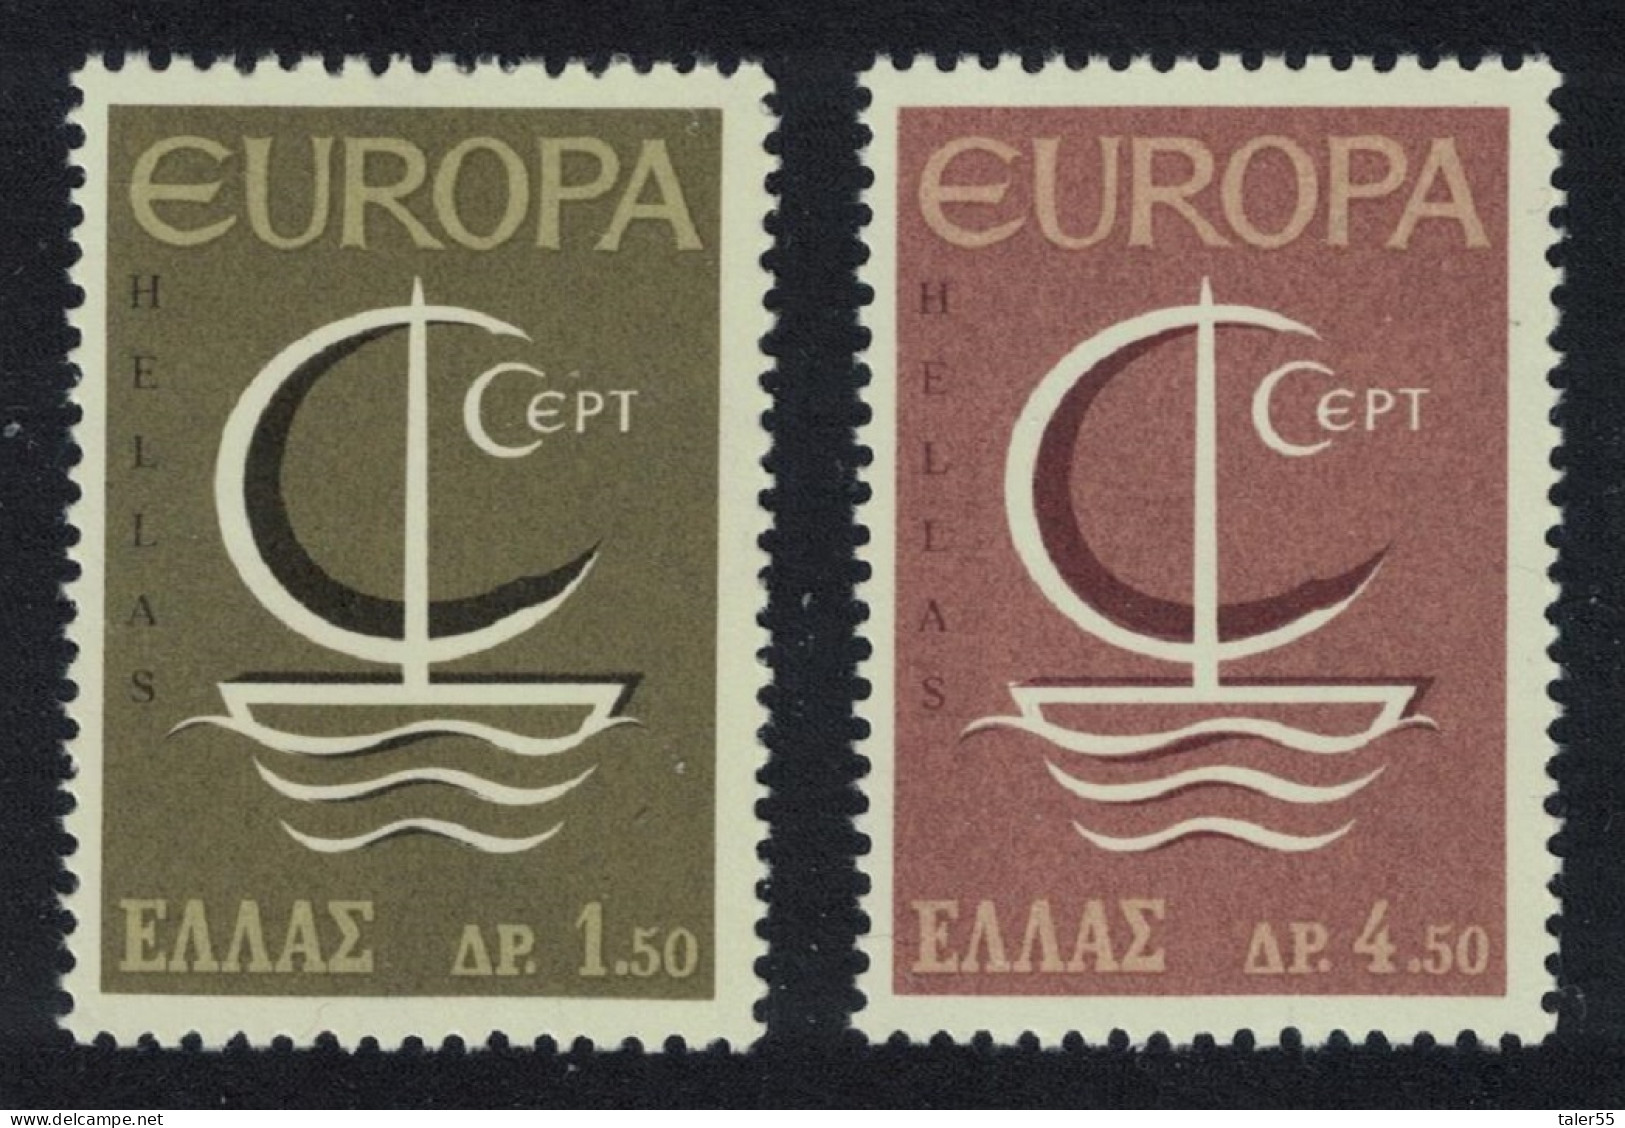 Greece Symbolic Ship Europa 2v 1966 MNH SG#1021-1022 MI#919-920 Sc#862-863 - Unused Stamps